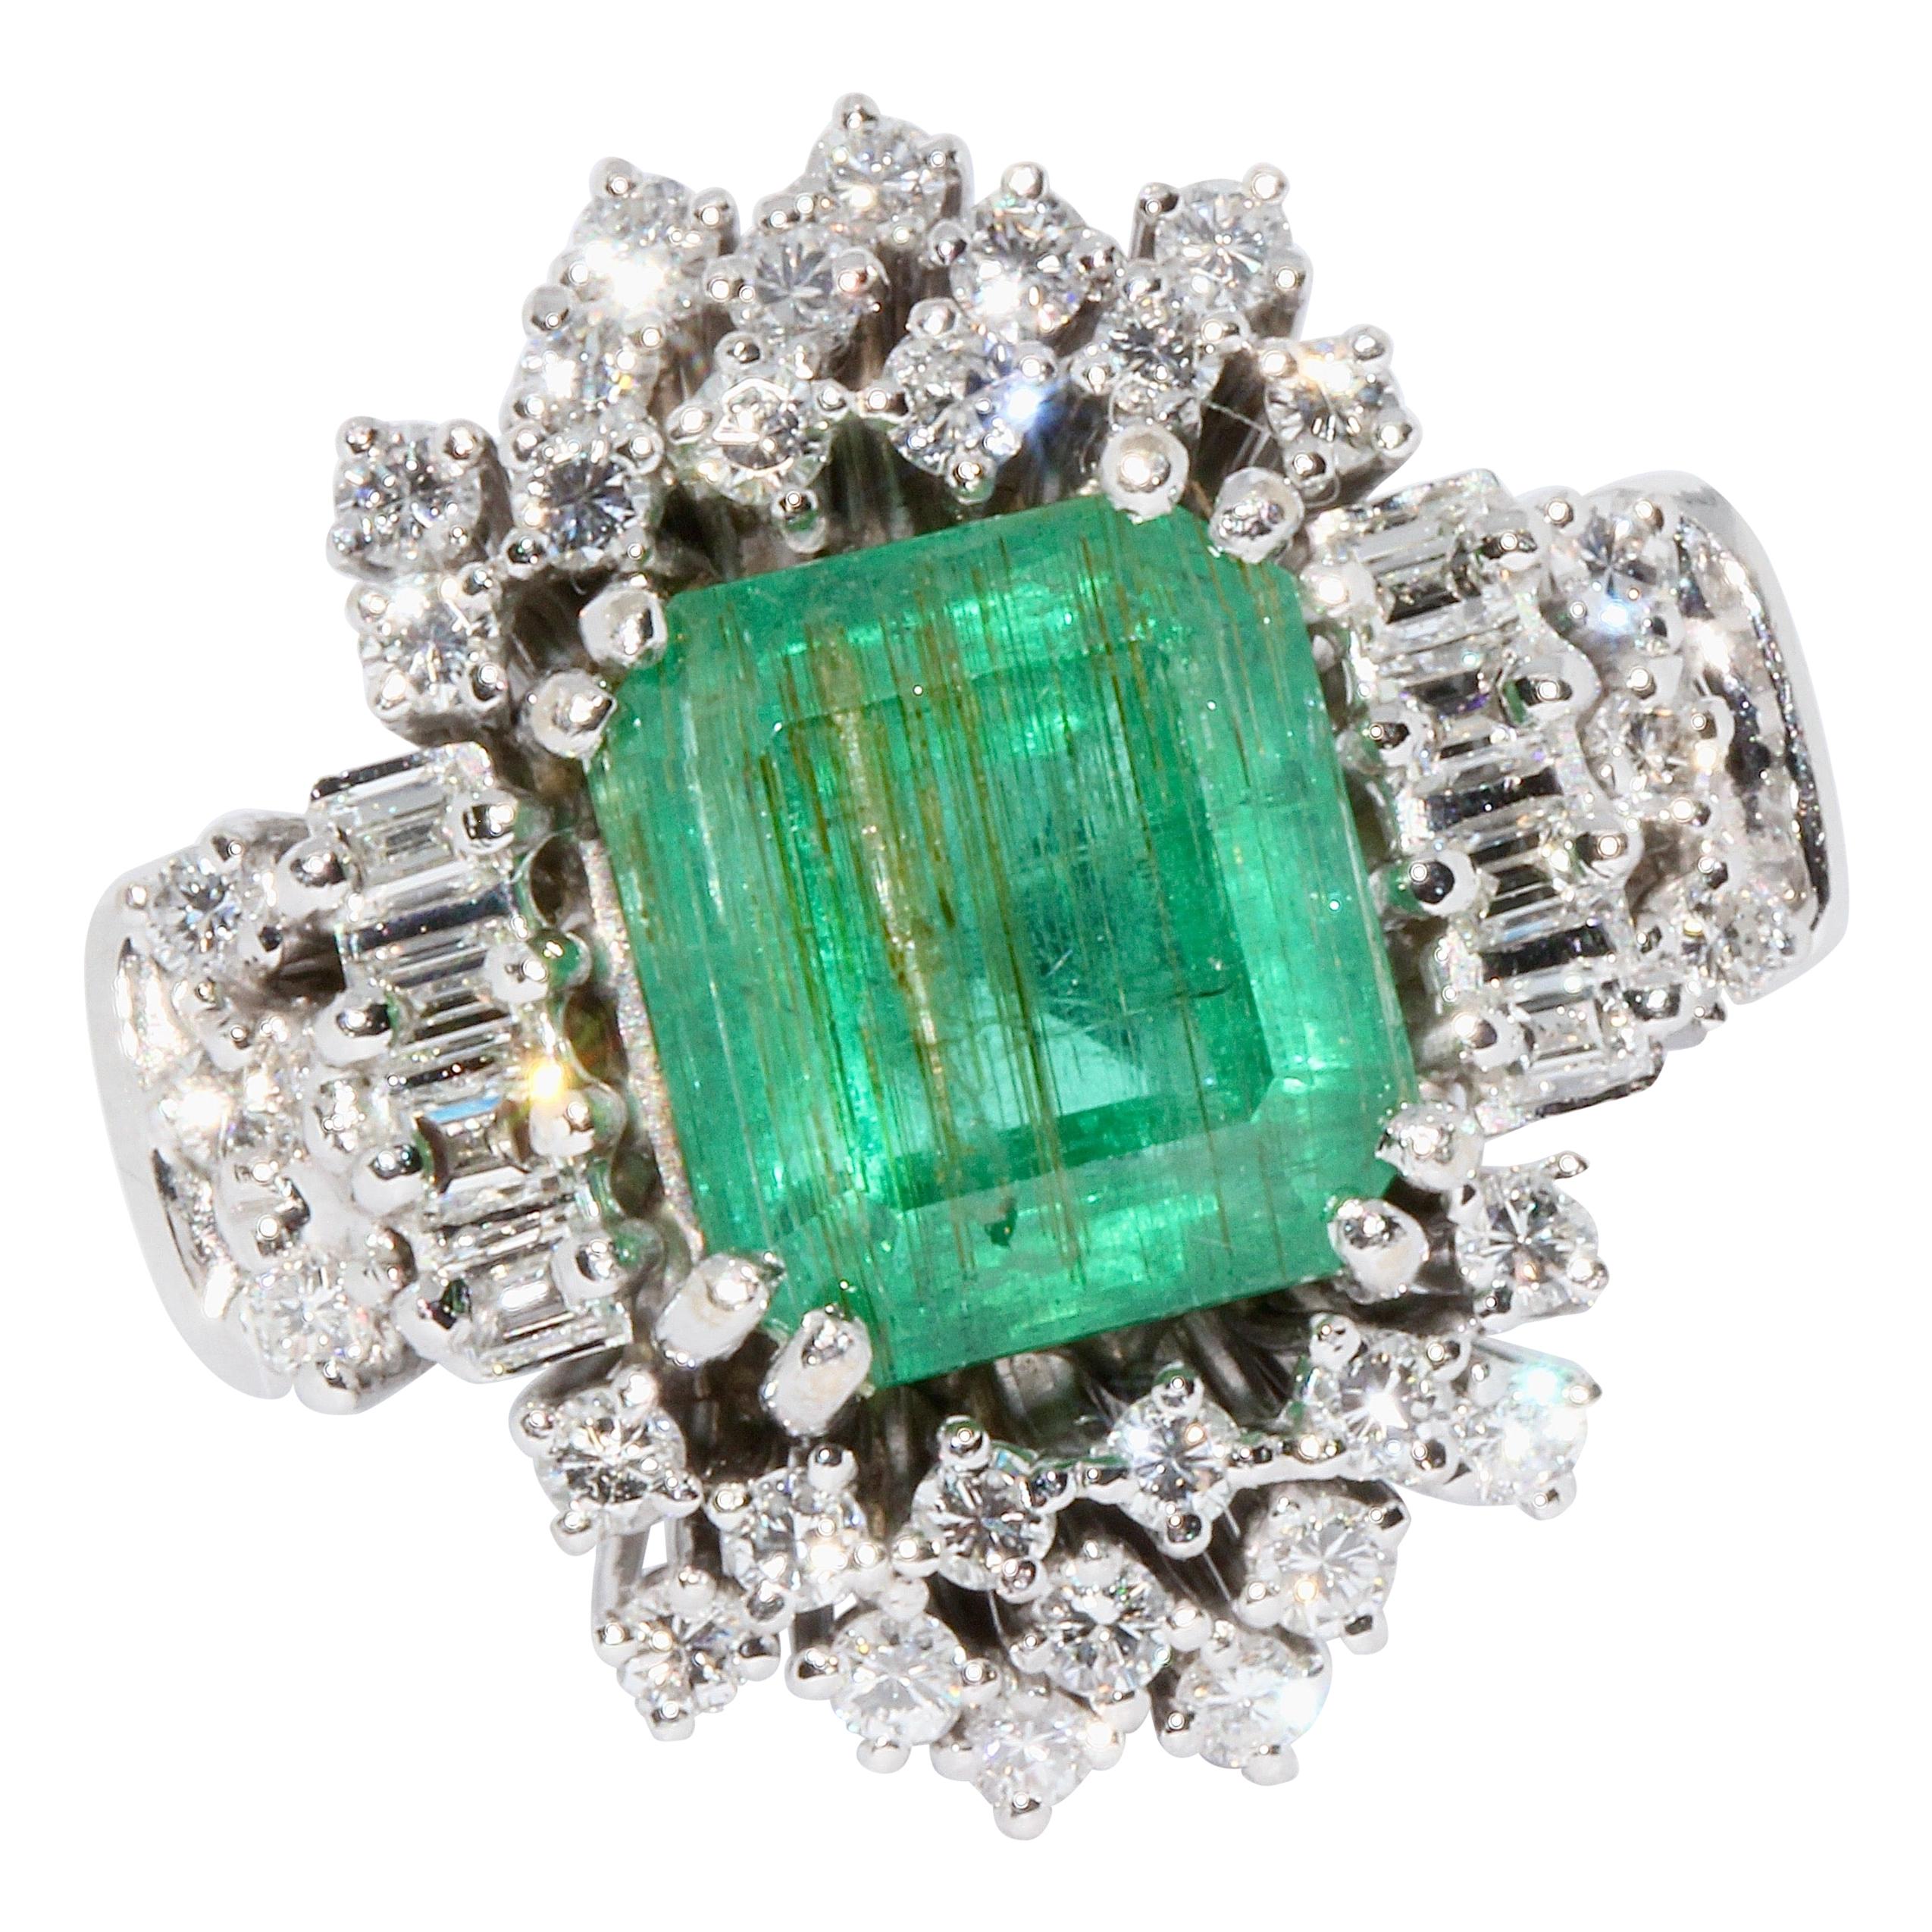 18 Karat White Gold Ring Set with White Diamonds and Large 4.5 Carat Emerald